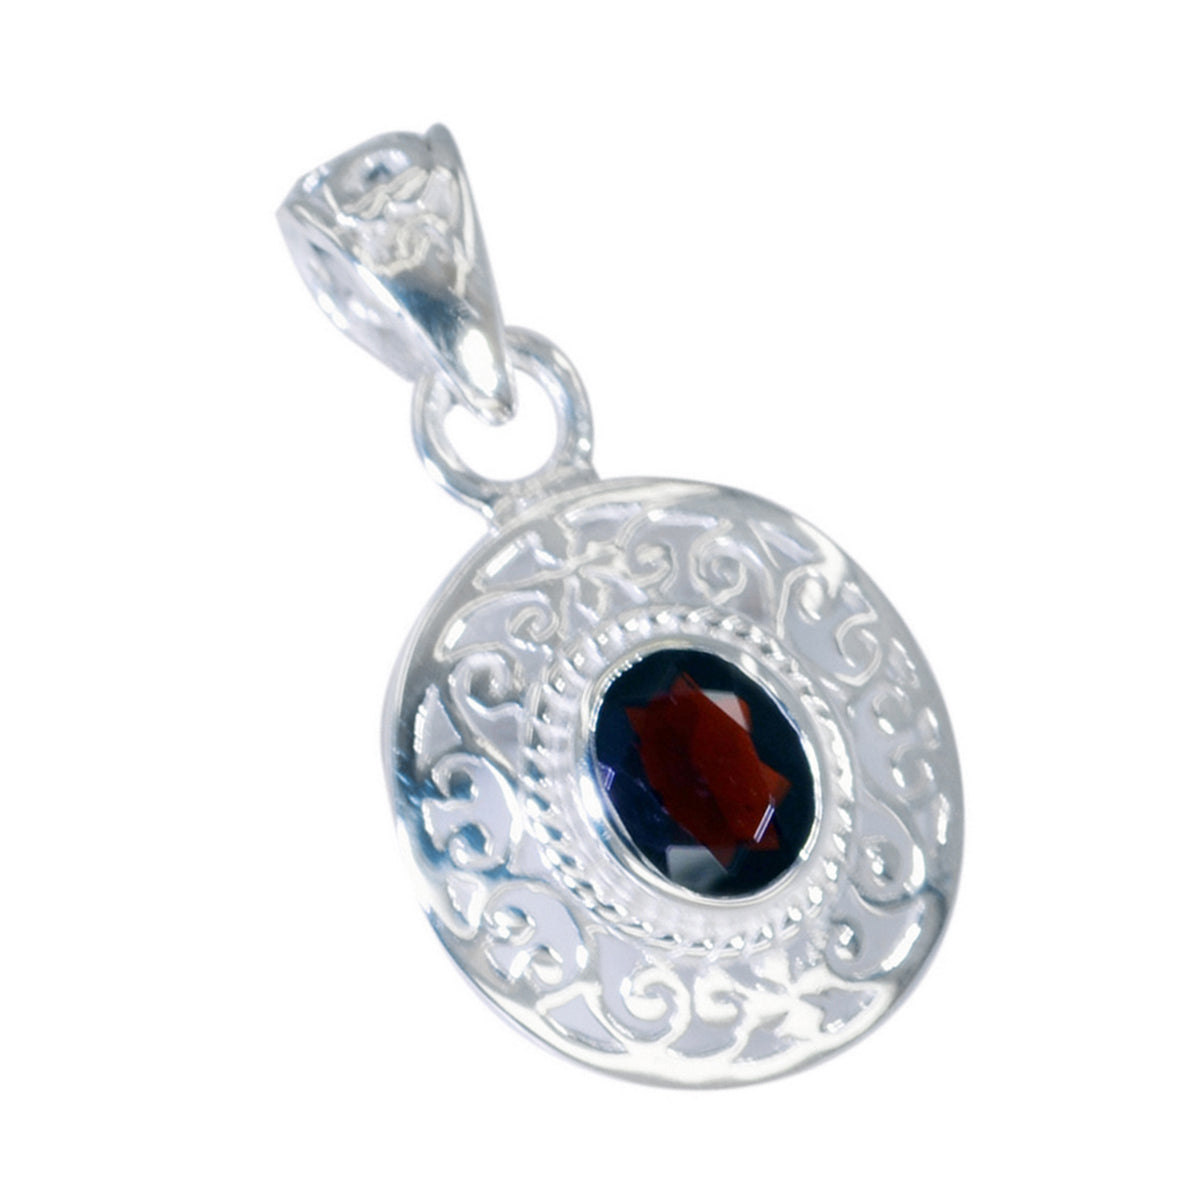 Riyo Genuine Gems Oval Faceted Red Garnet Silver Pendant Gift For Sister